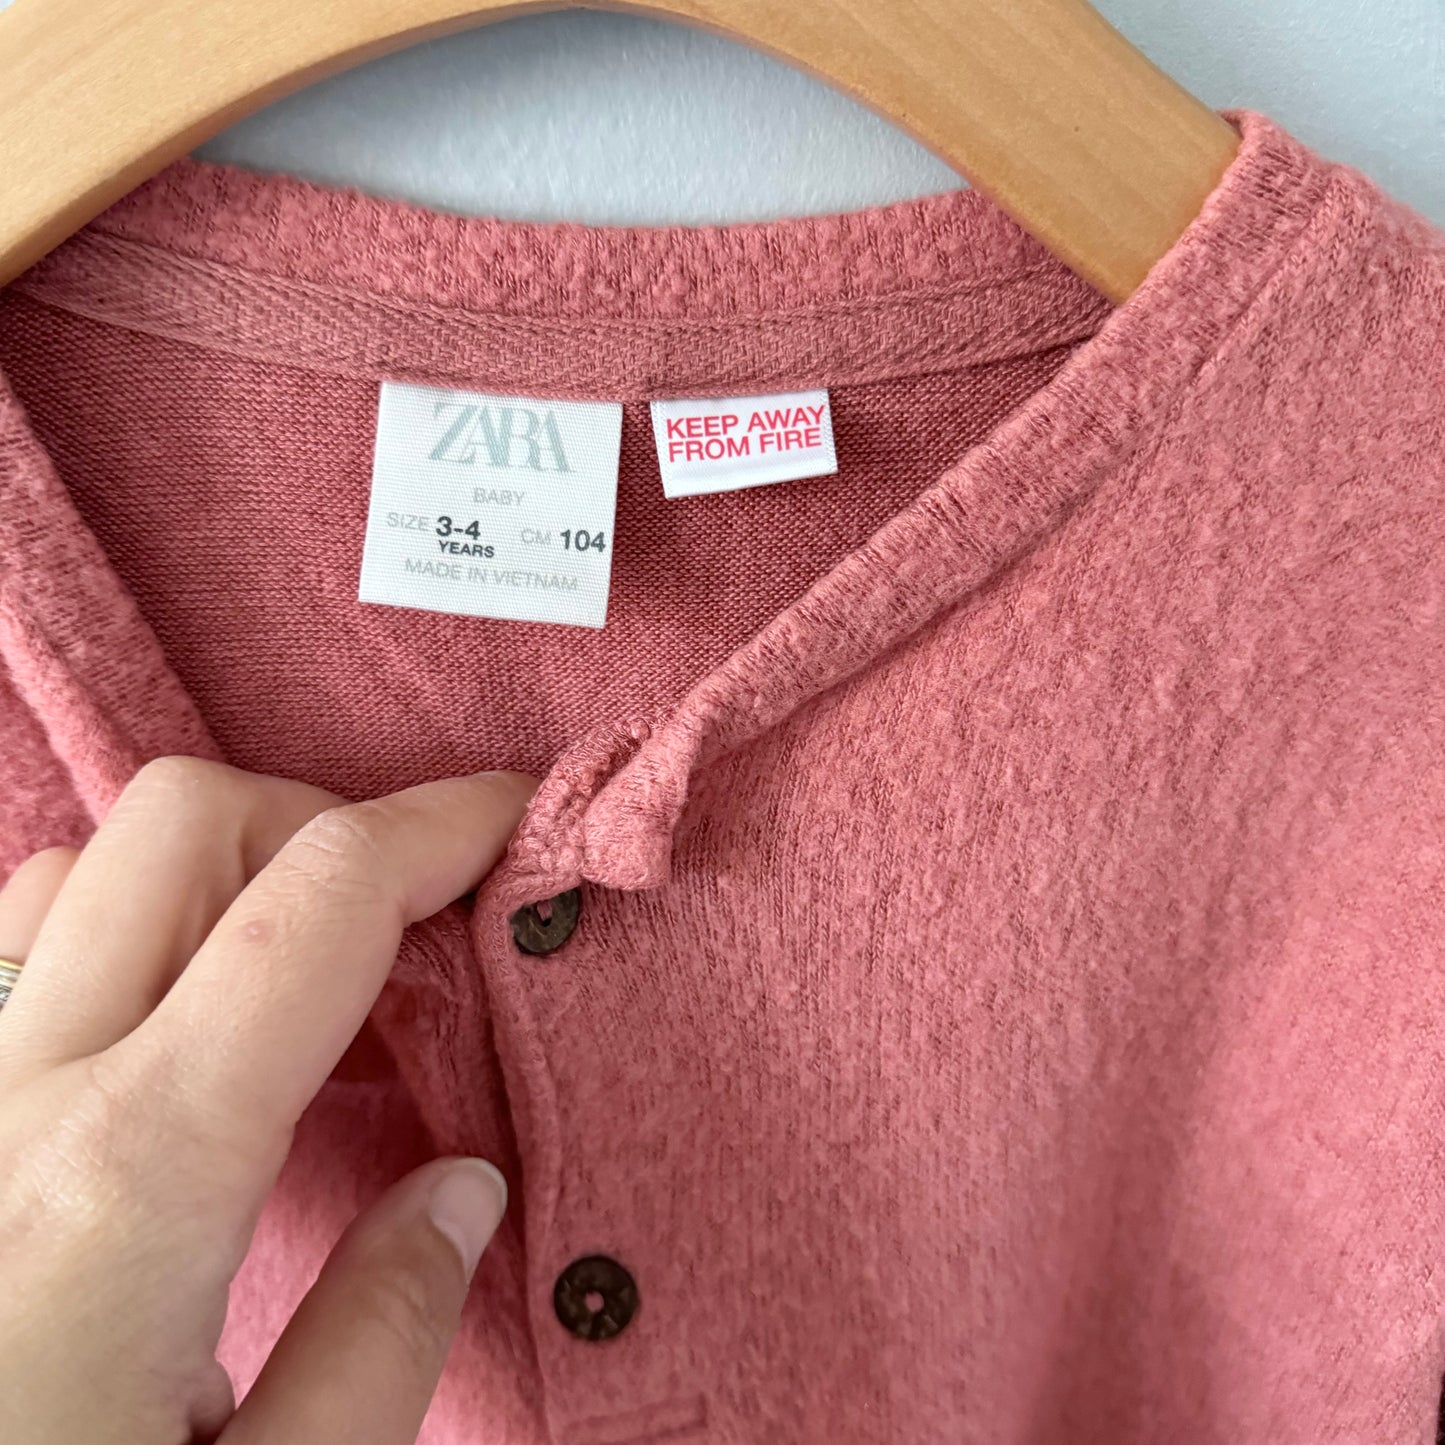 Zara / Orange soft knit tops / 3-4Y